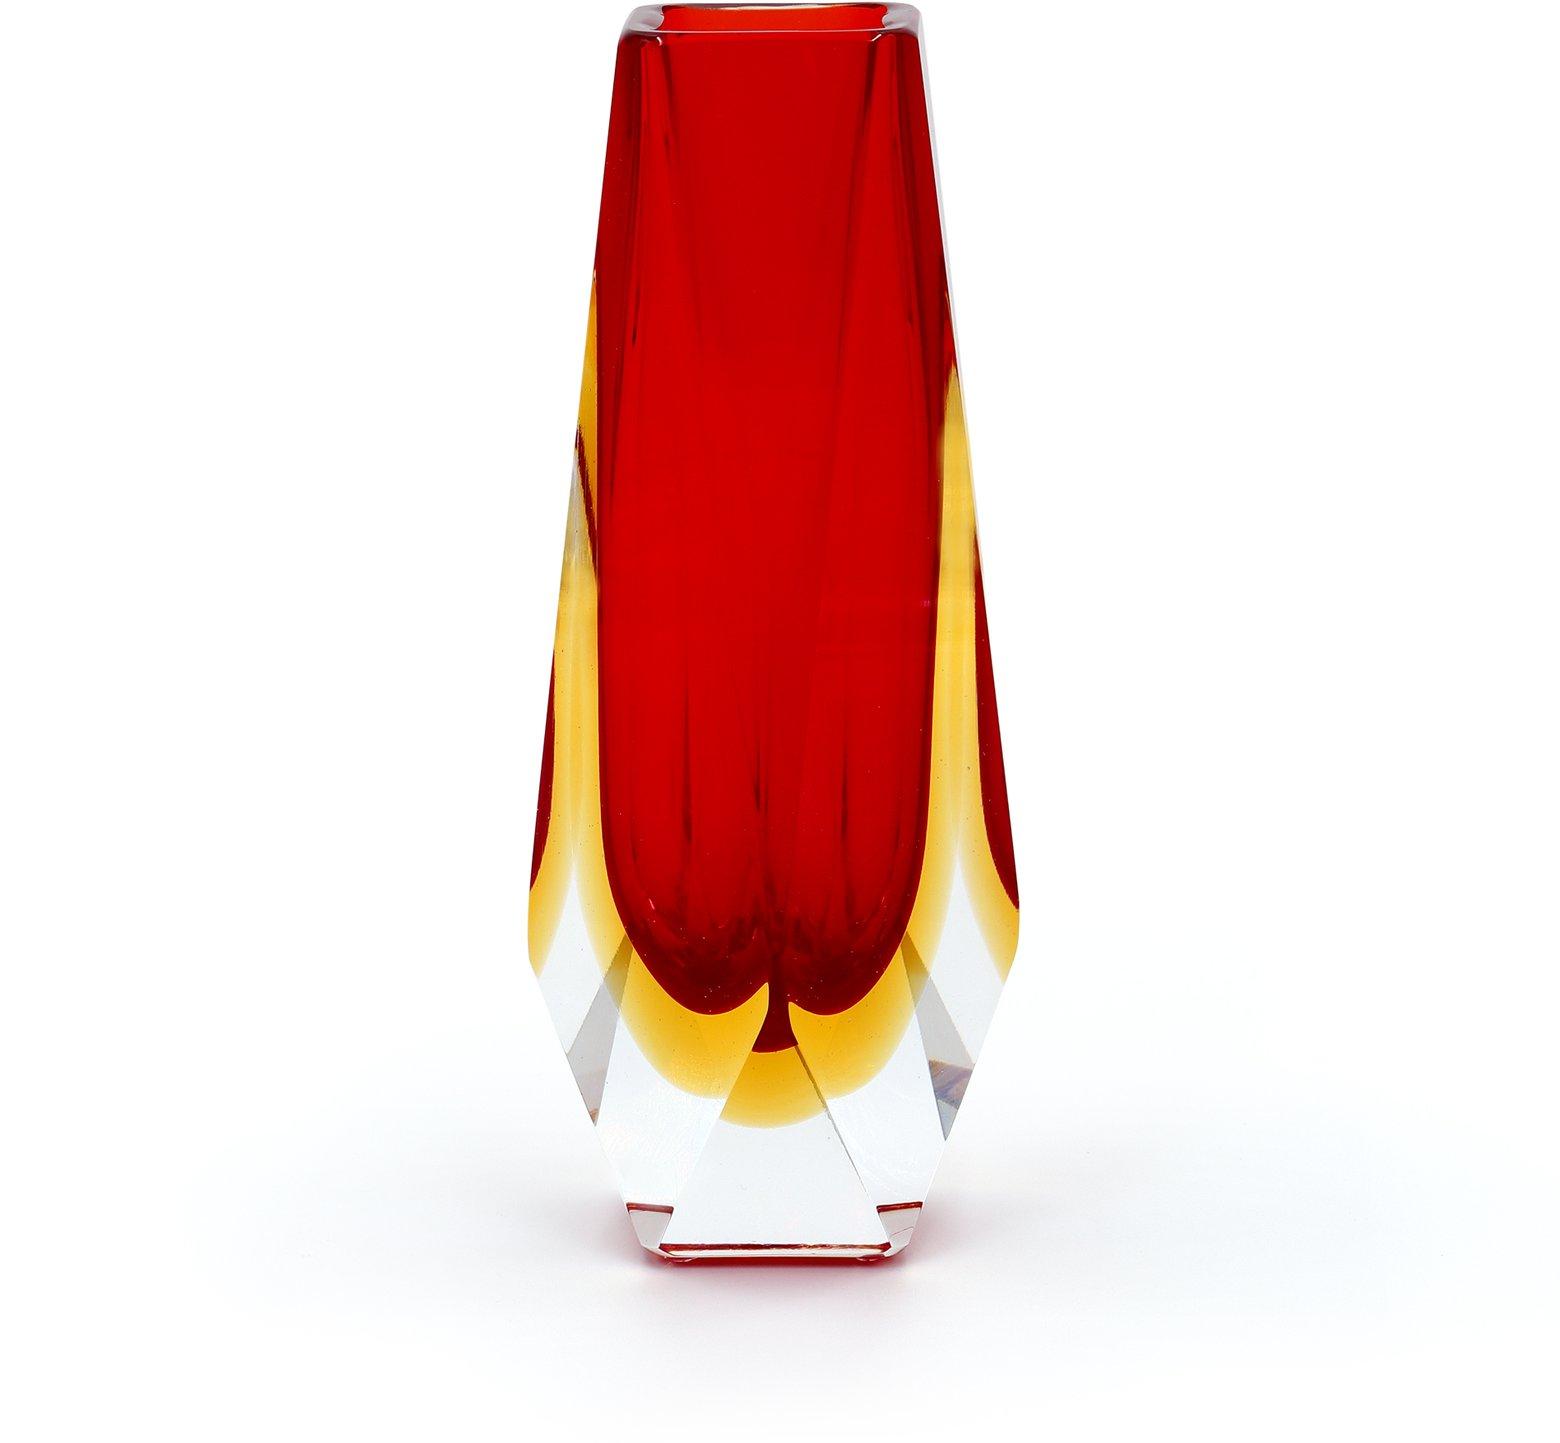 FORZIERI Vase Mandruzzato Medium Murano Glass at Goccia Red/Amber Alessandro